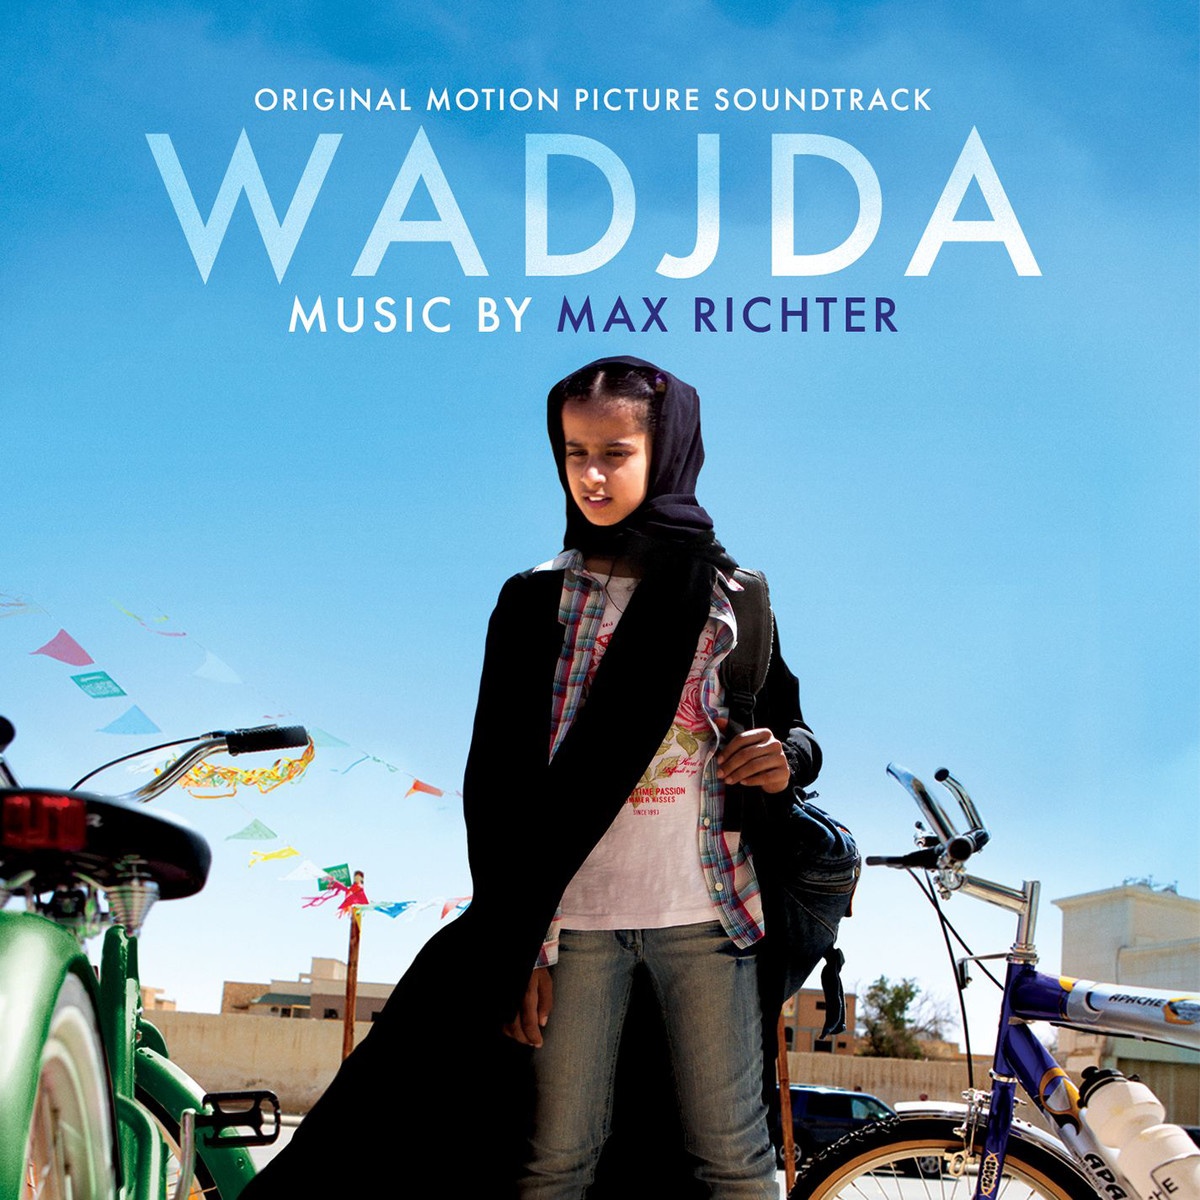 Wadjda's Journey